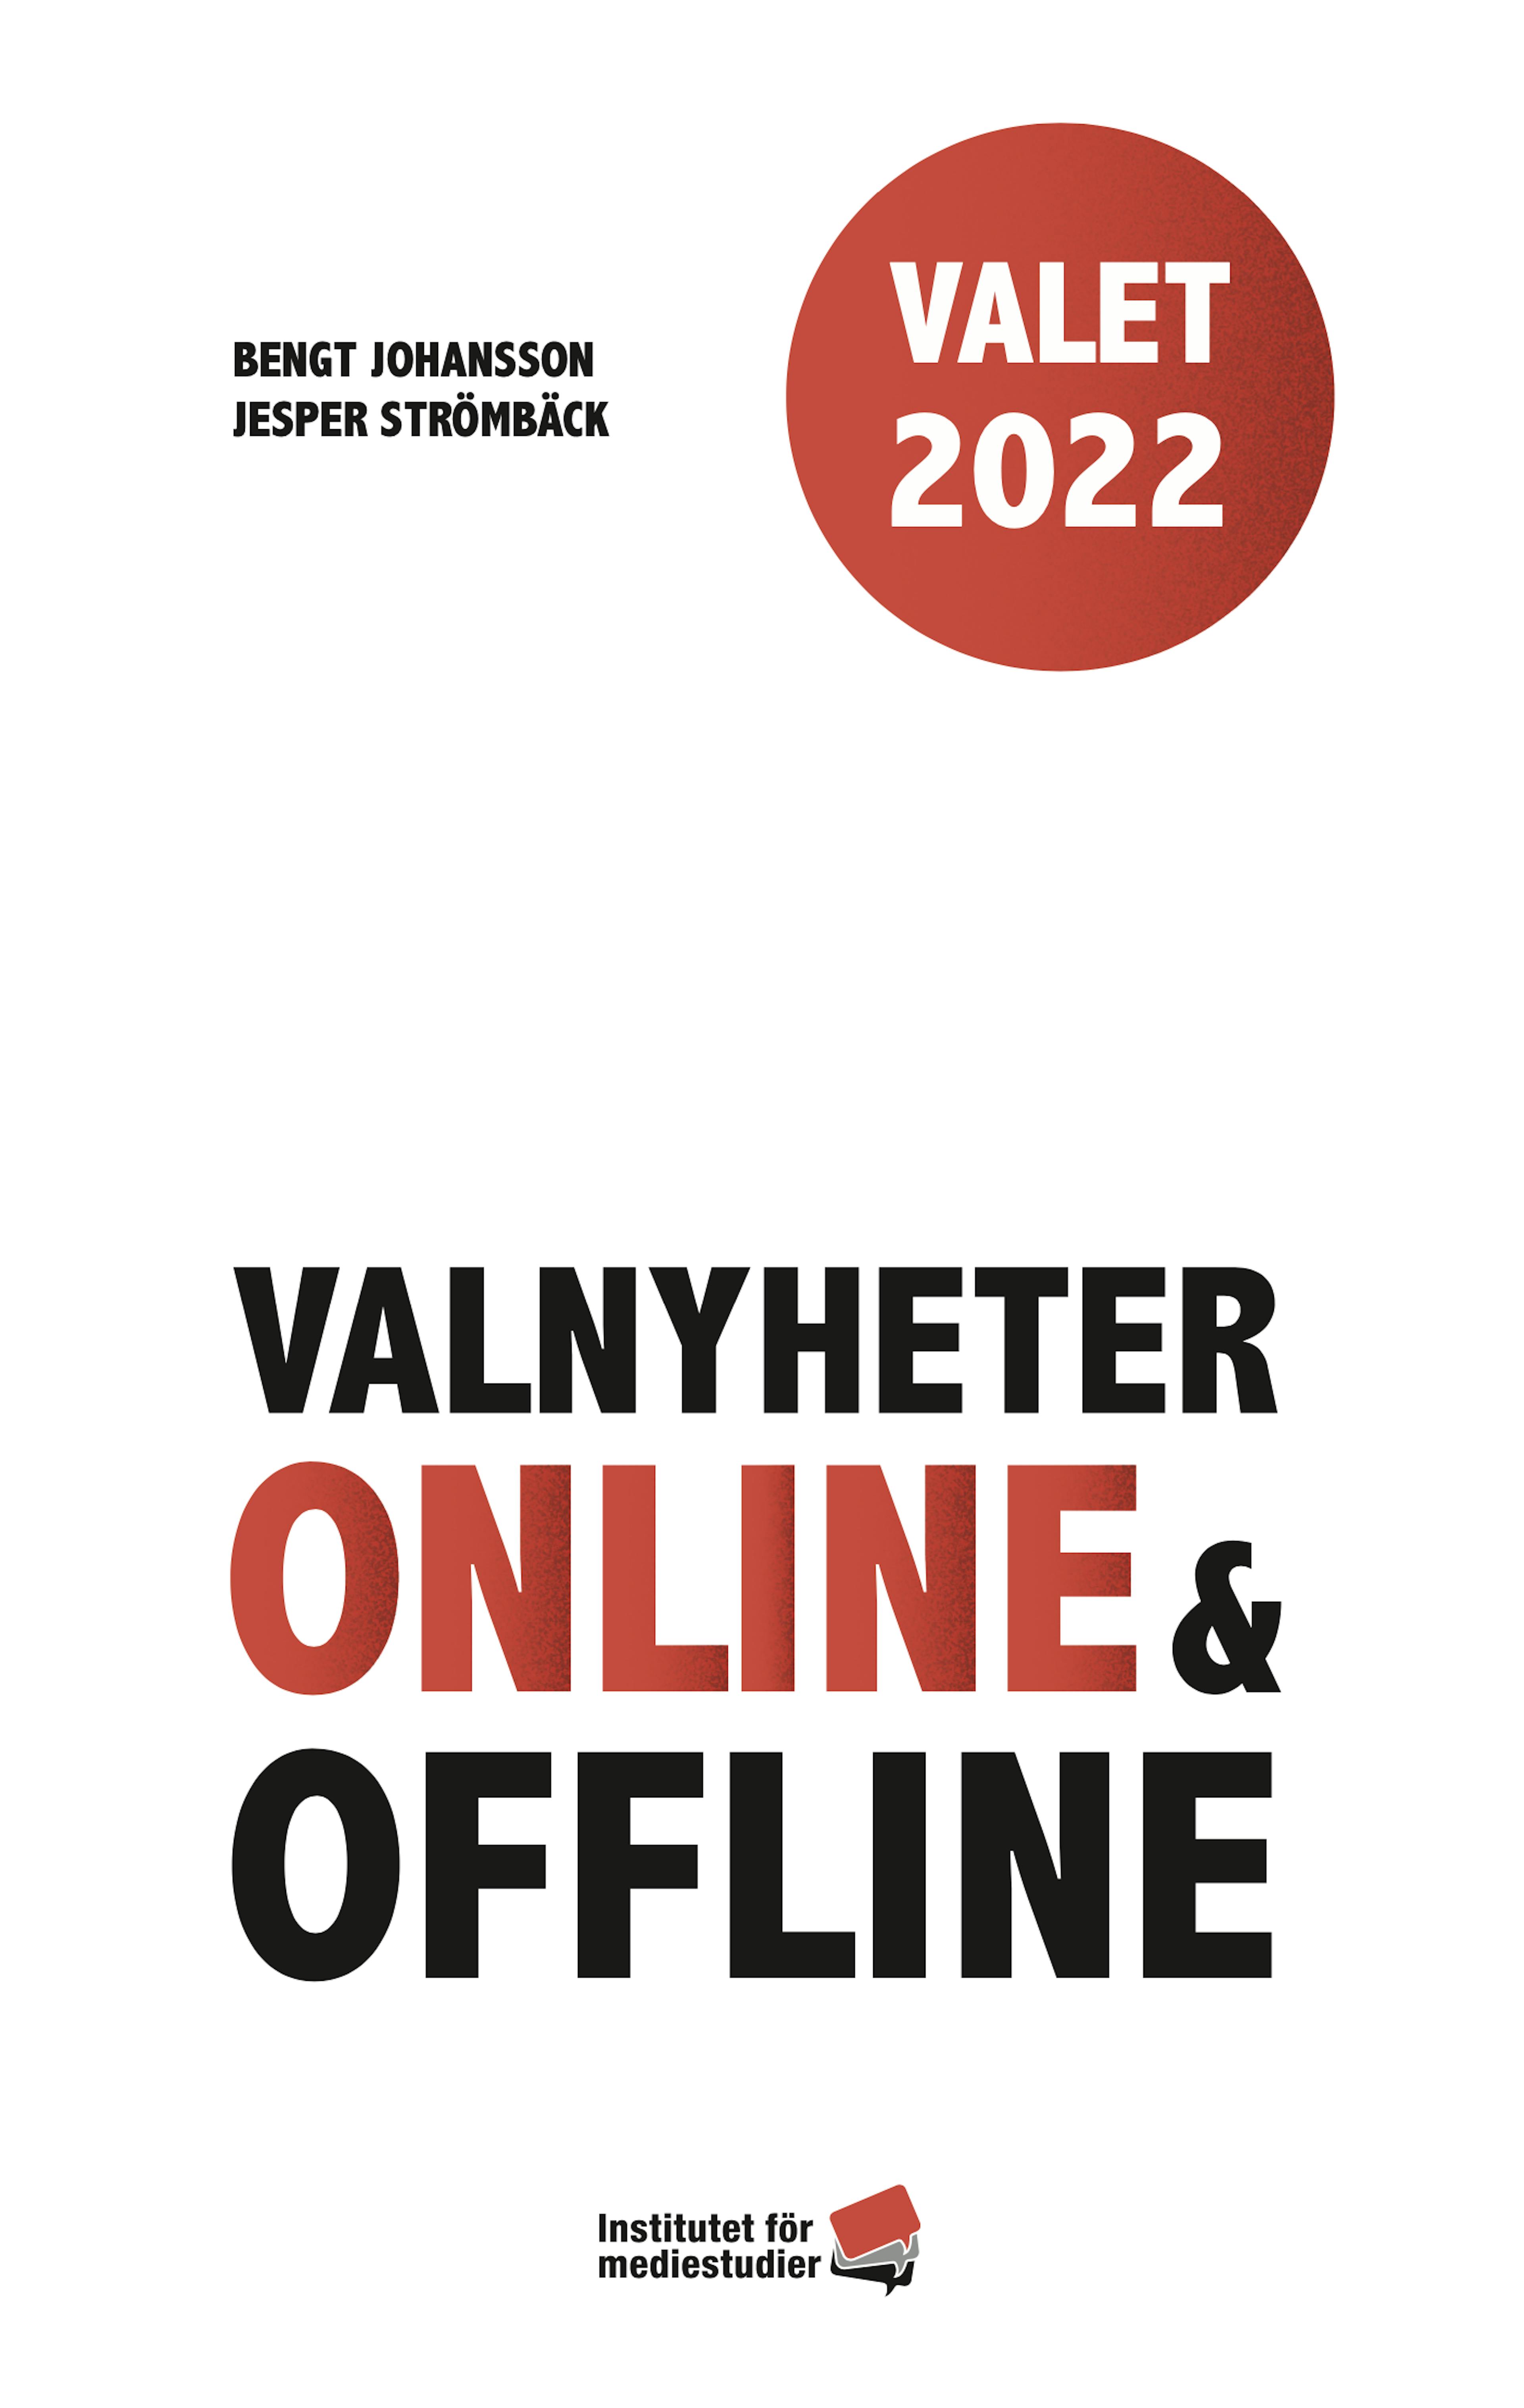 Report: Valet 2022: Valnyheter online och offline cover image